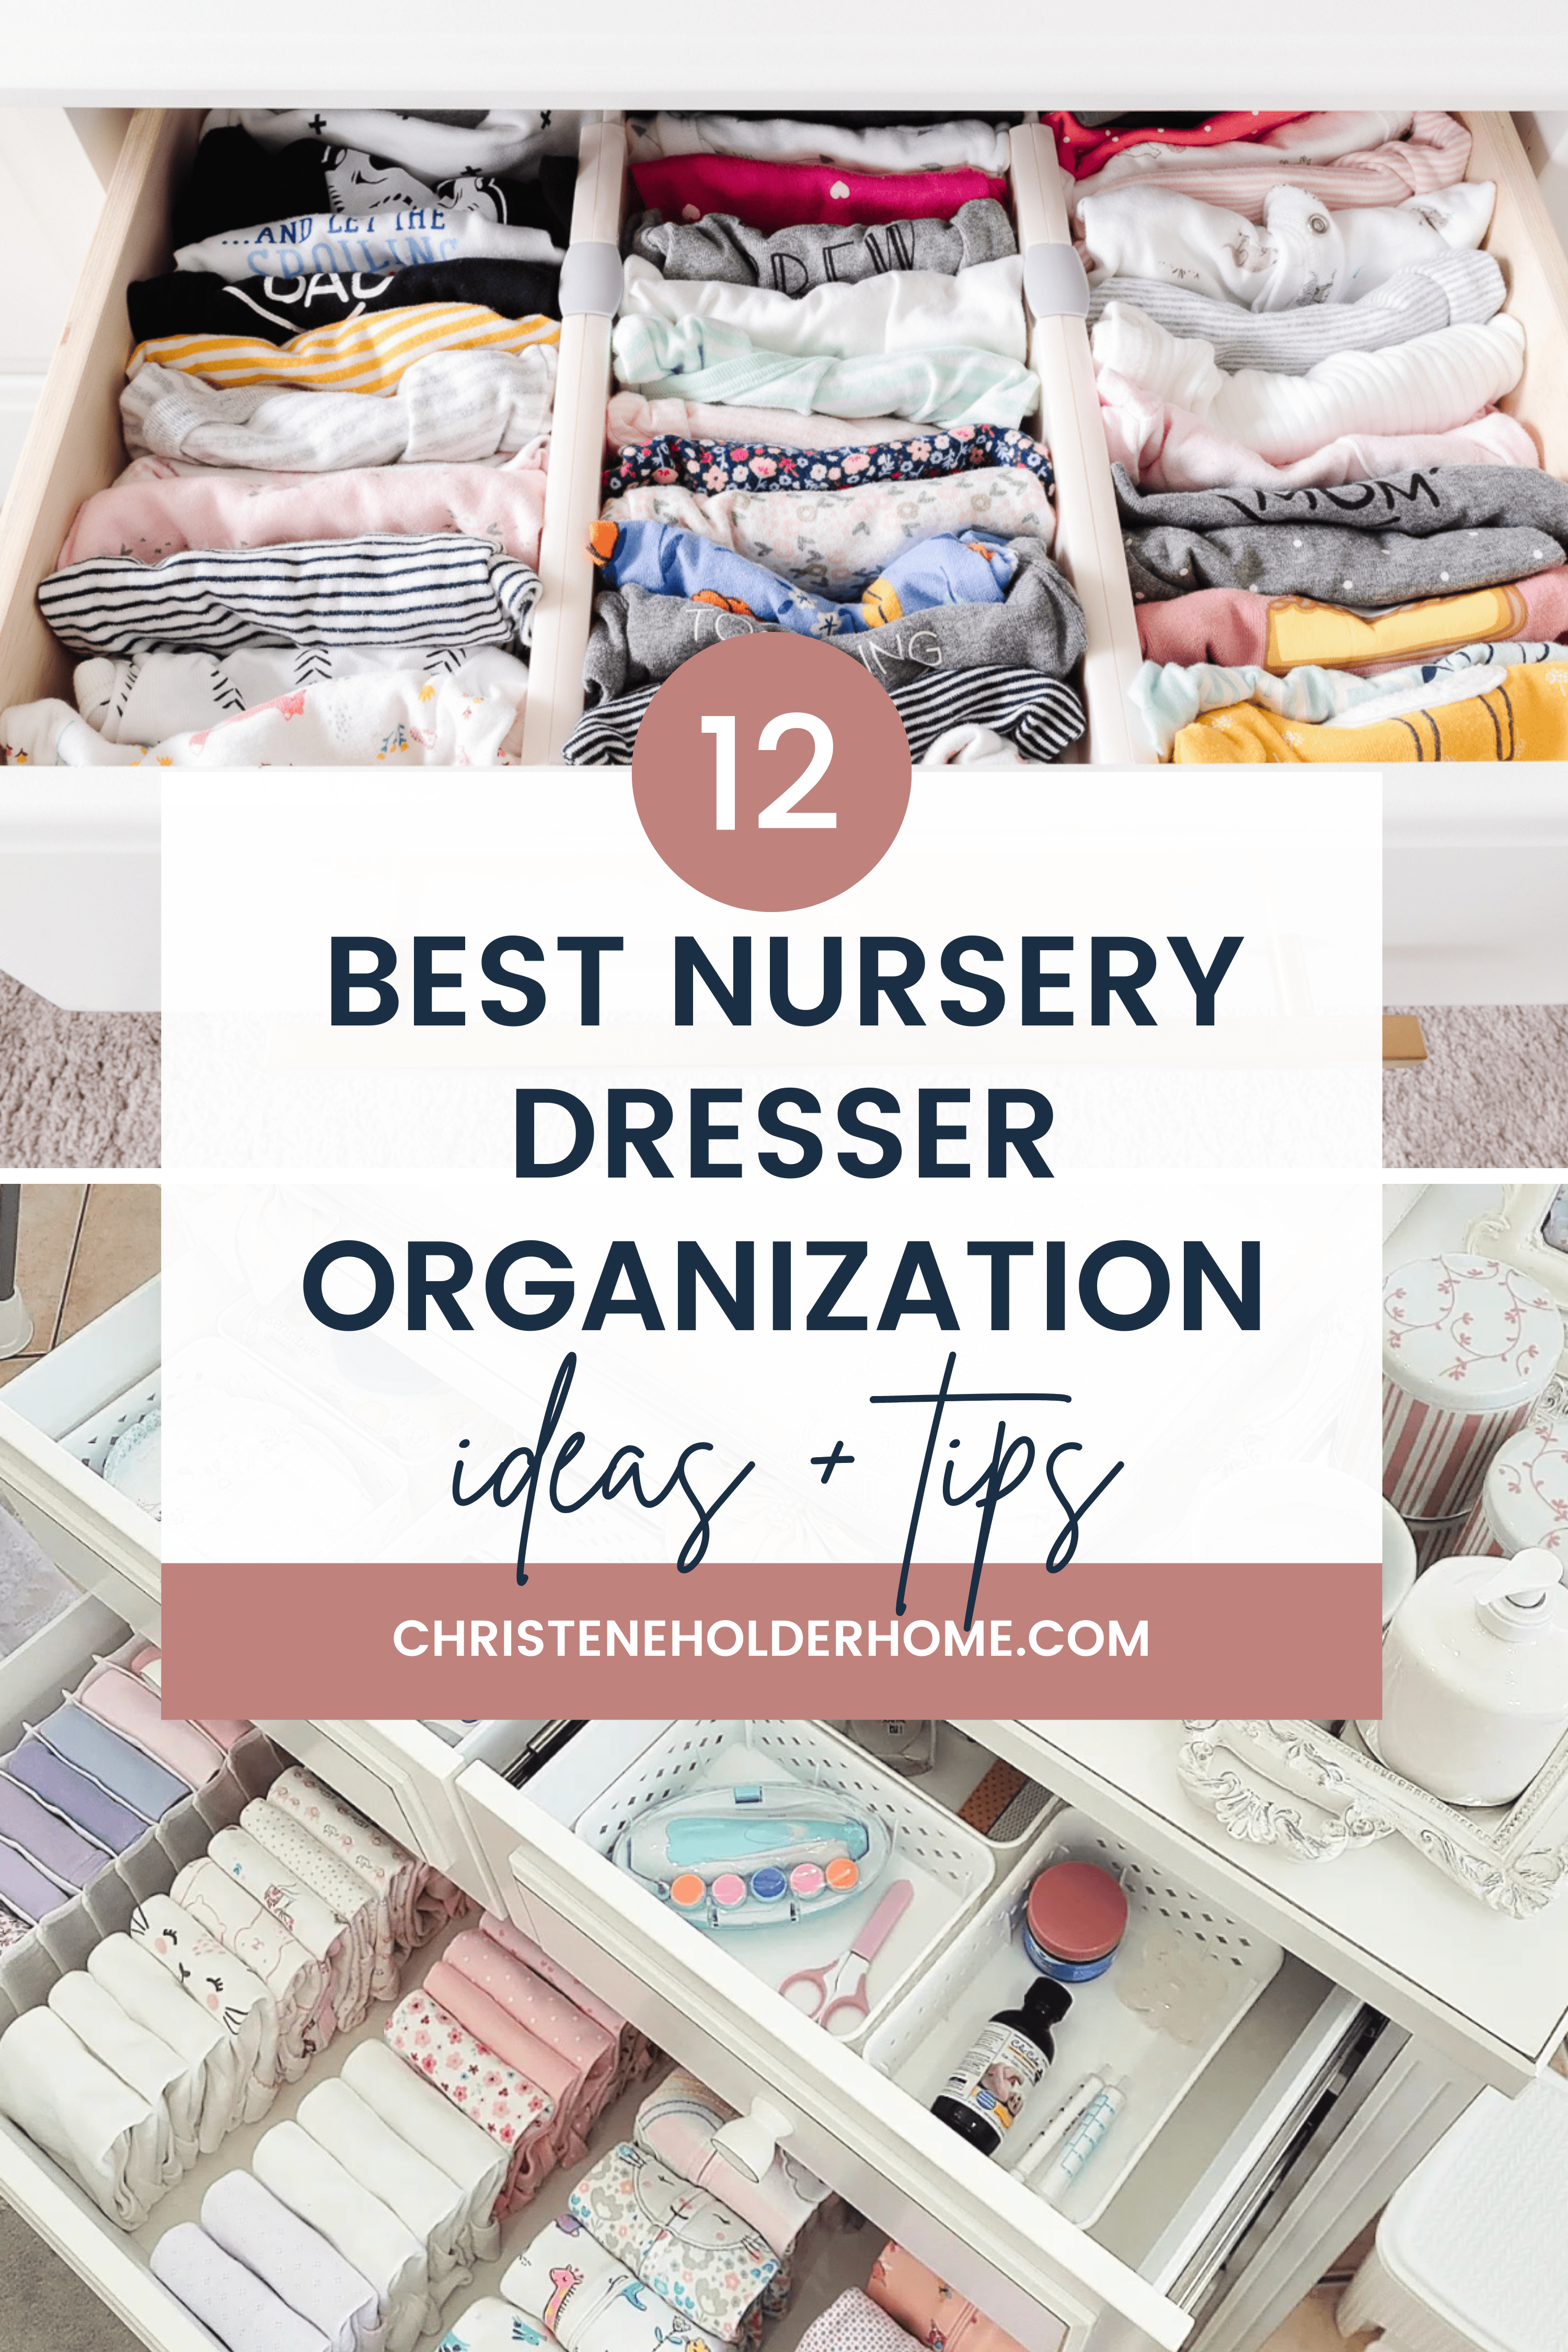 Baby Organization and Nursery Organization Tips